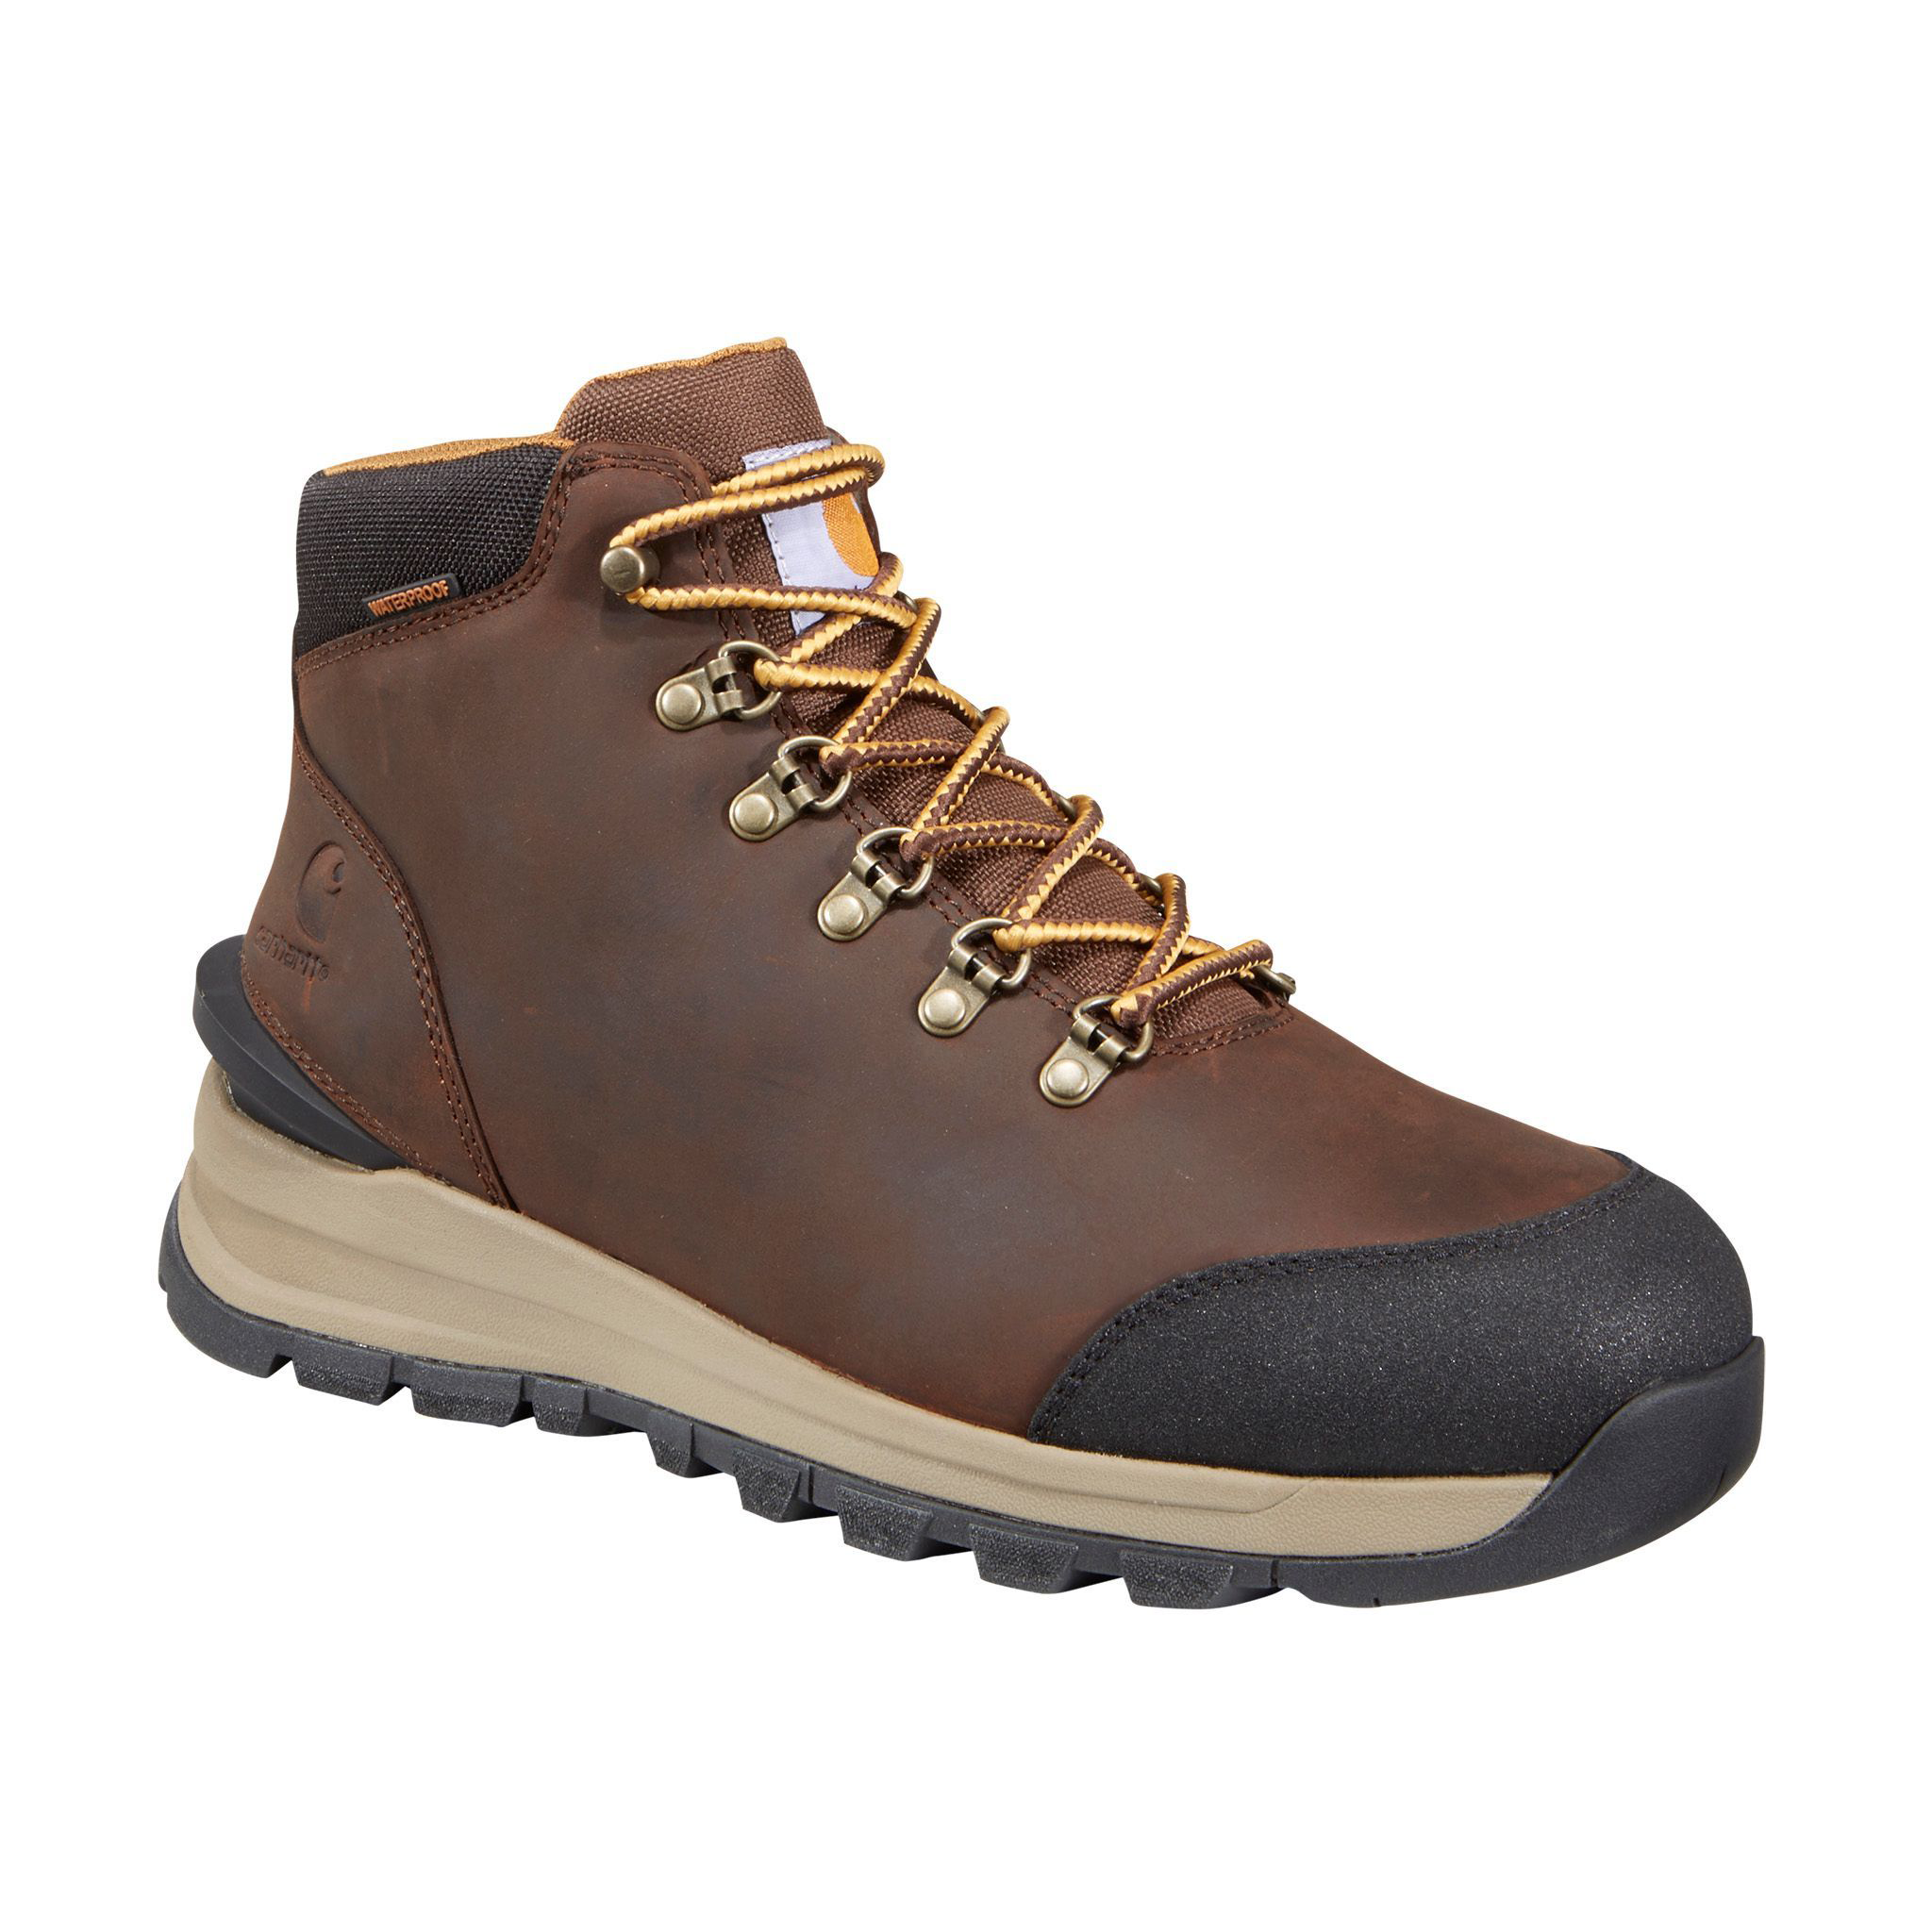 Carhartt Gilmore Waterproof Hiking Boots for Men - Dark Brown Oil Tanned - 11.5M